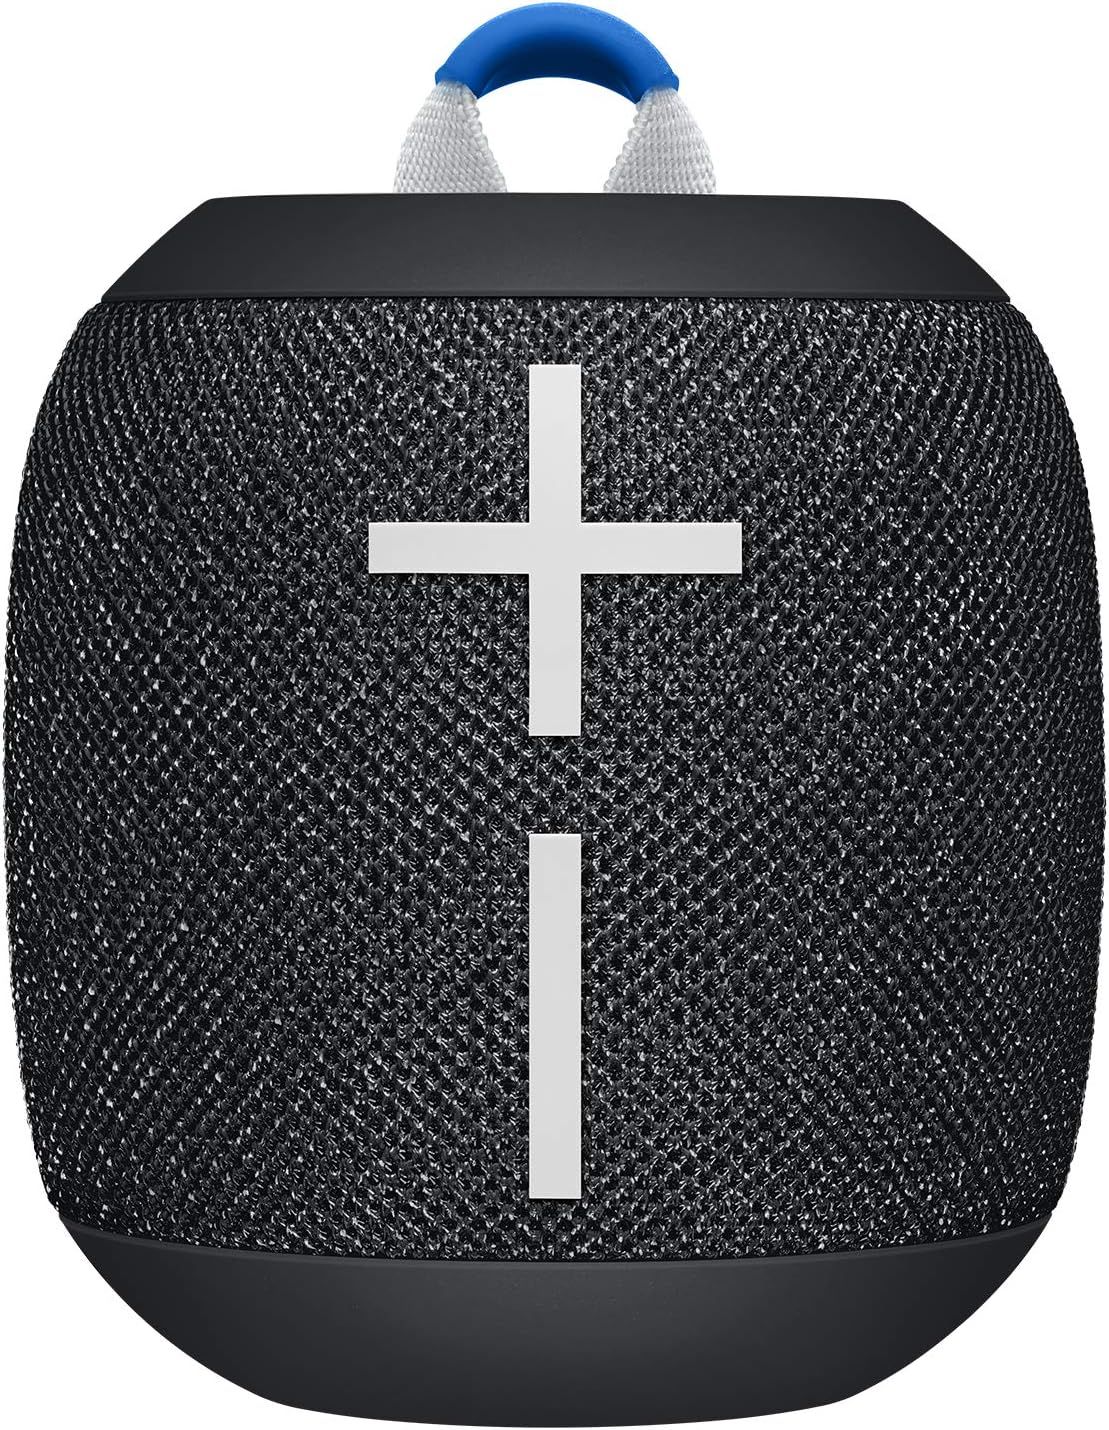 ULTIMATE EARS WONDERBOOM 2, Portable Wireless Bluetooth Speaker, Big Bass 360 Sound, Waterproof /... | Amazon (US)